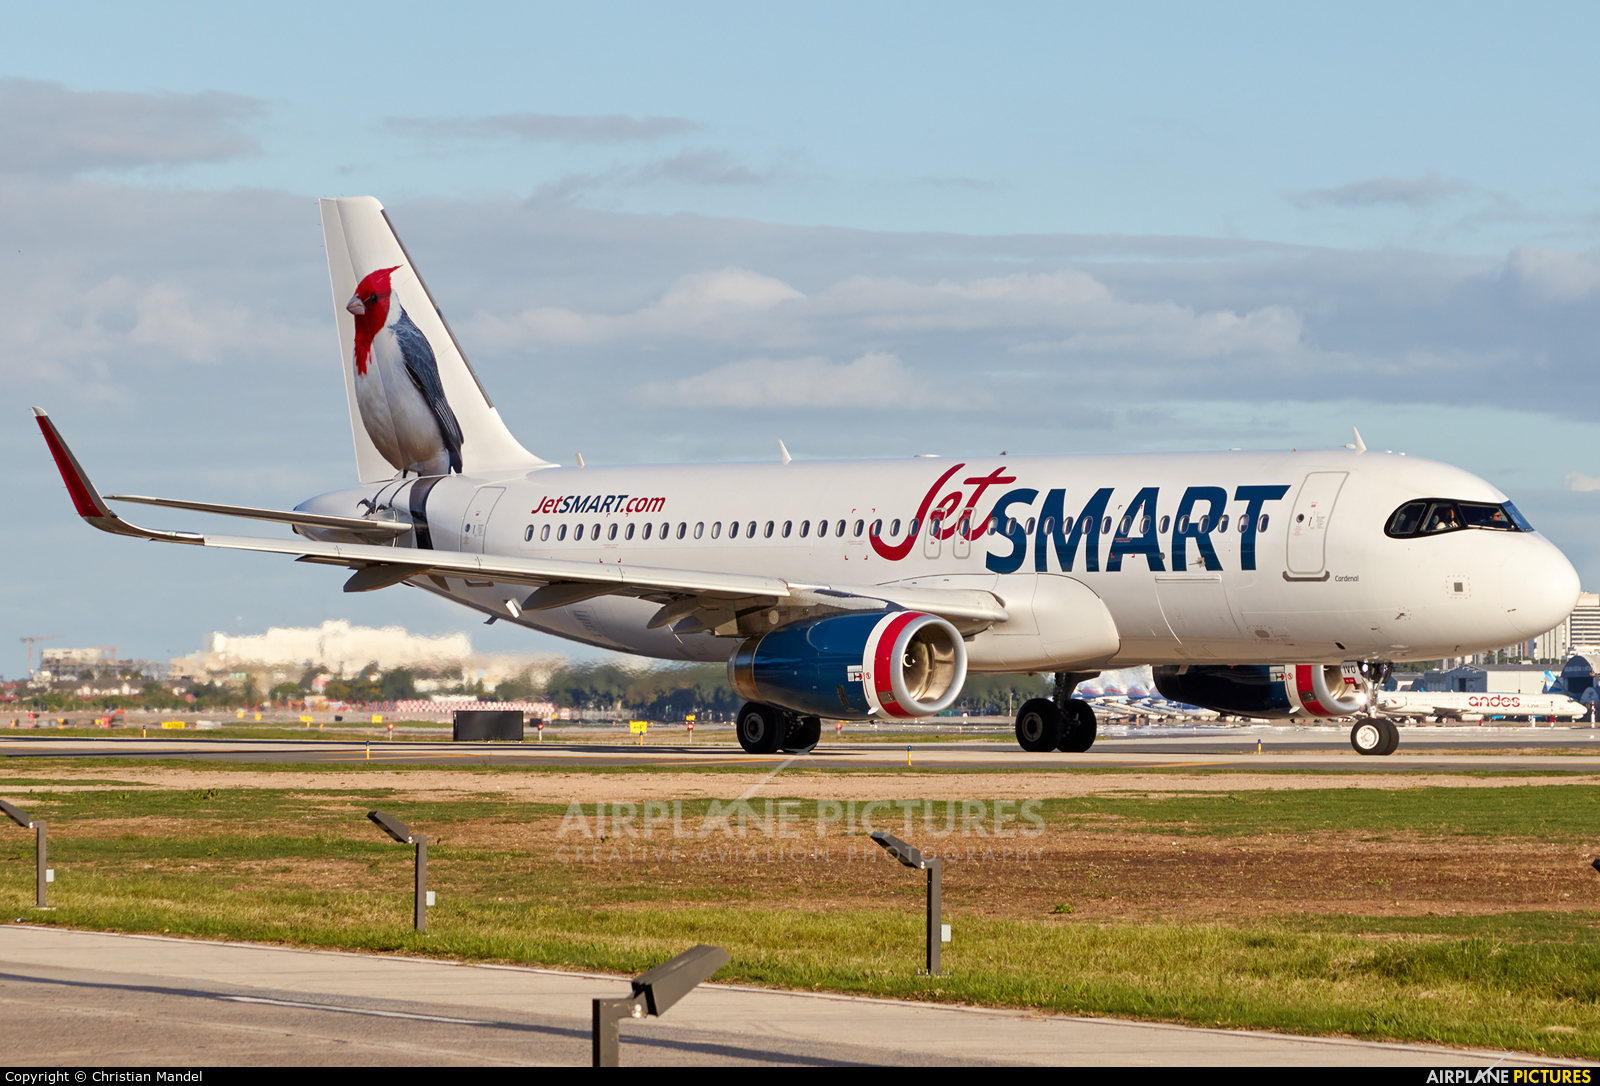 LVFR A320 CEO - Jet Smart Argentina LV-IVO (Cardenal) for